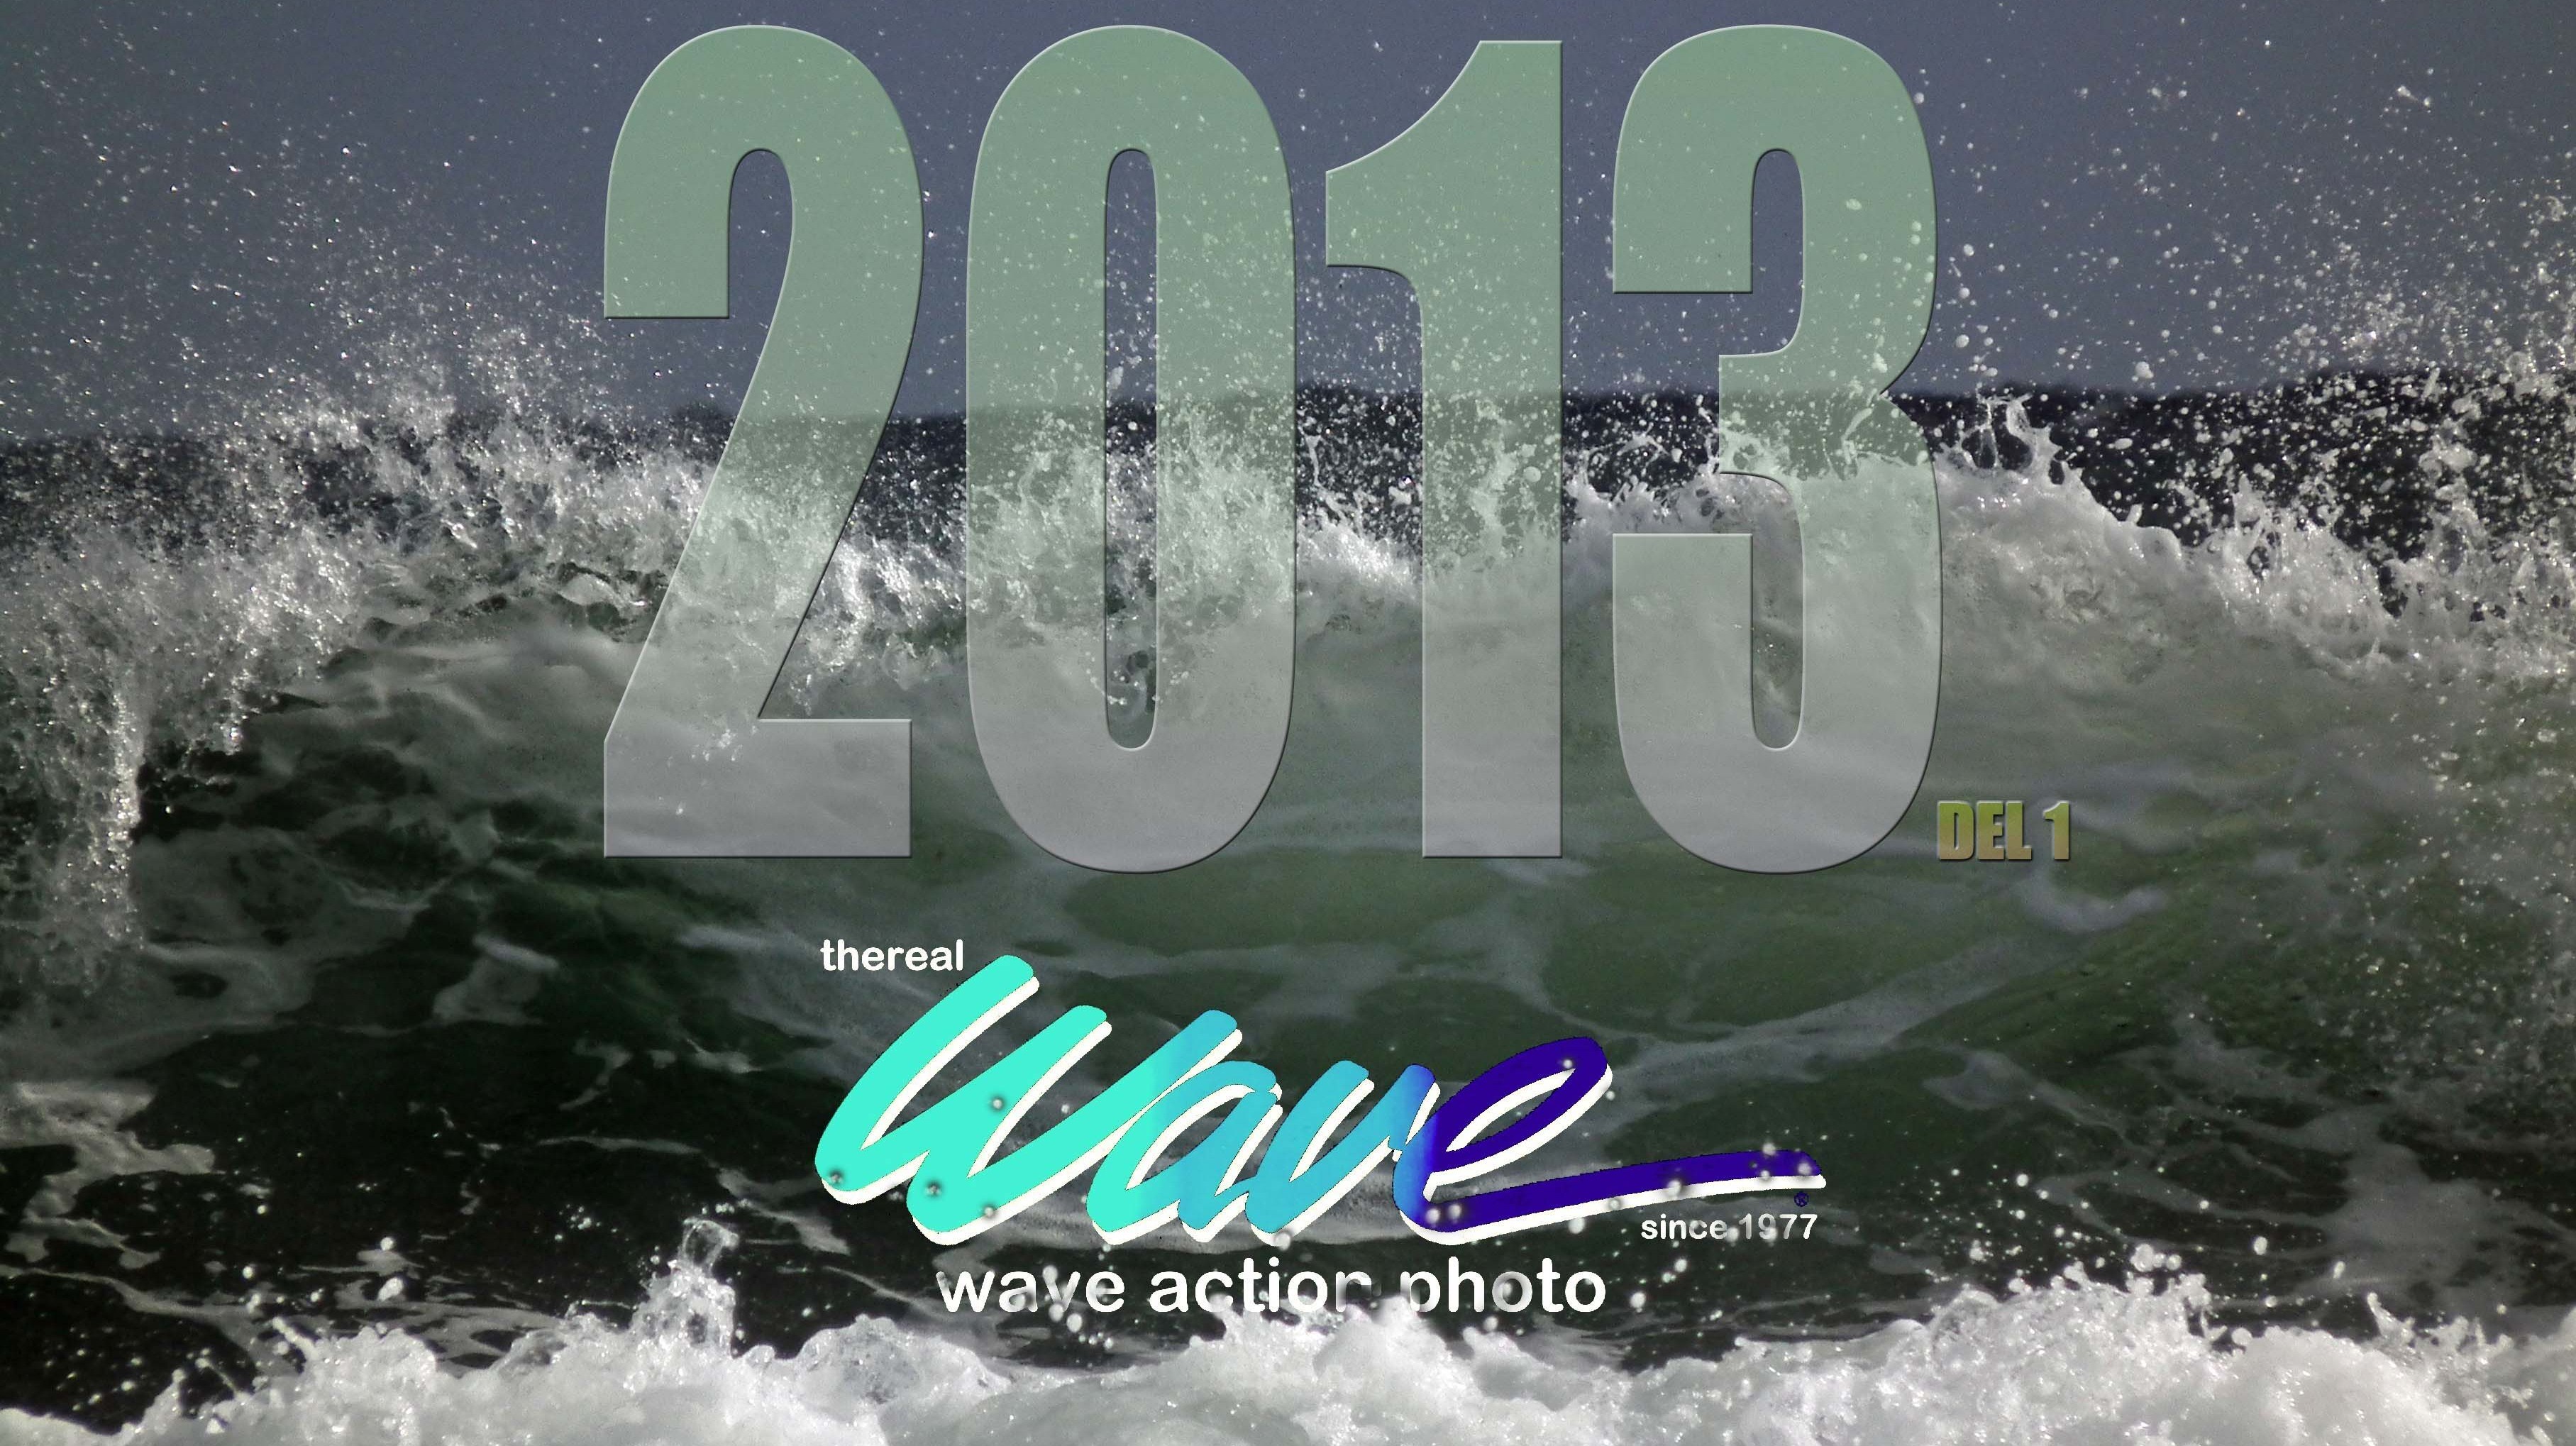 001 surf year 2013